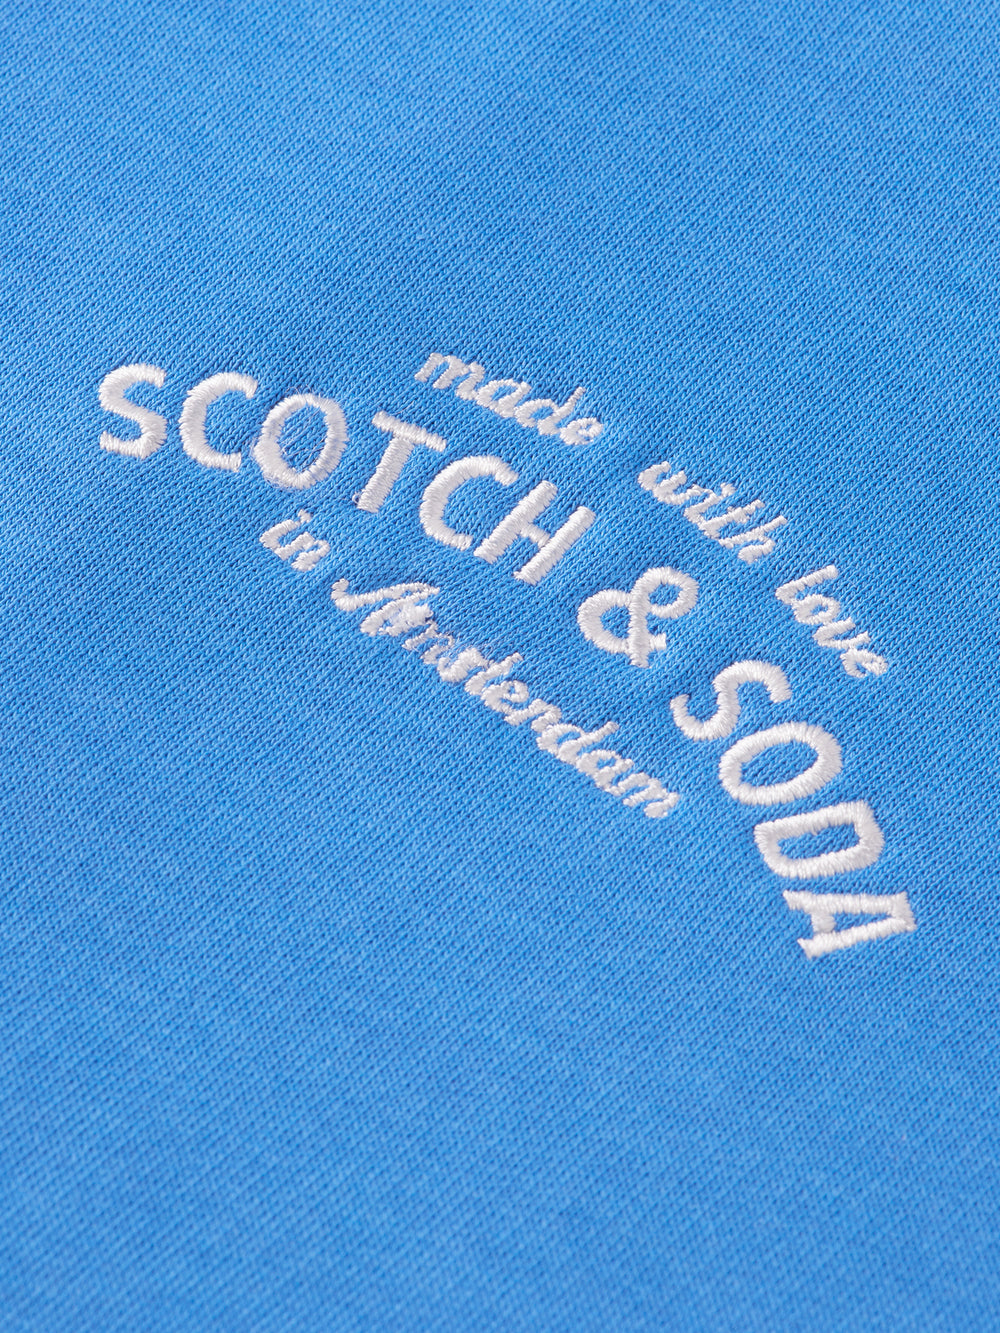 Relaxed-fit colourblock sweatshirt - Scotch & Soda AU